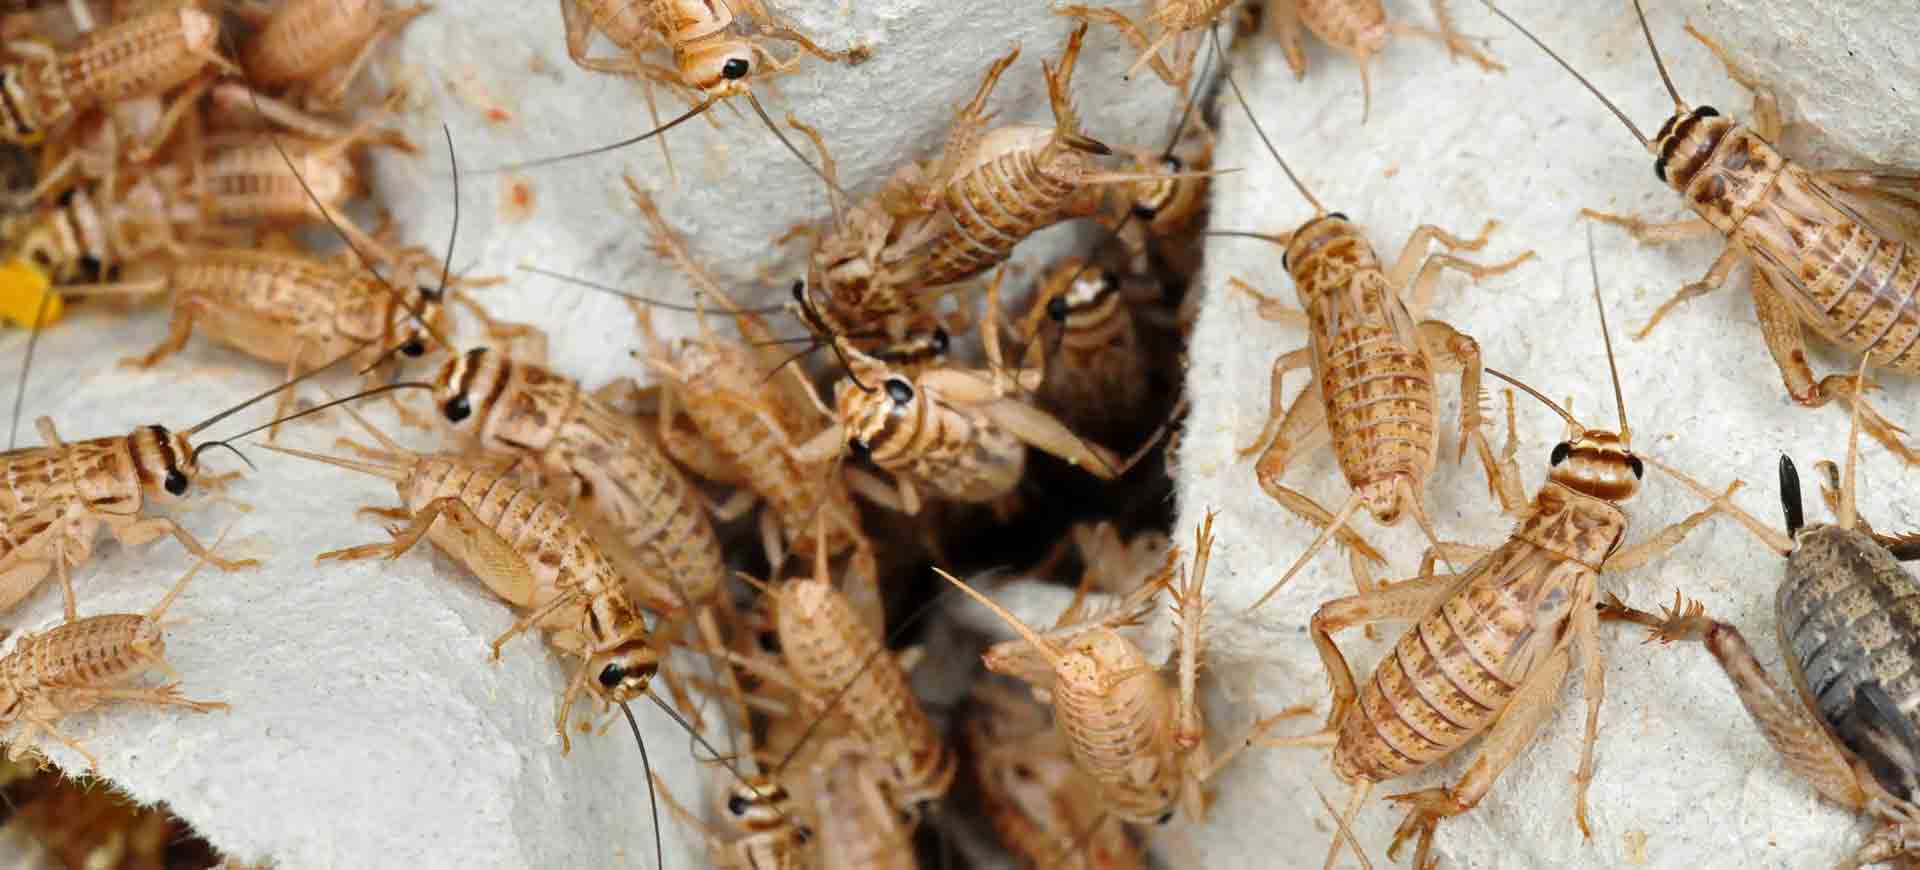 cricket pest control downtown san diego